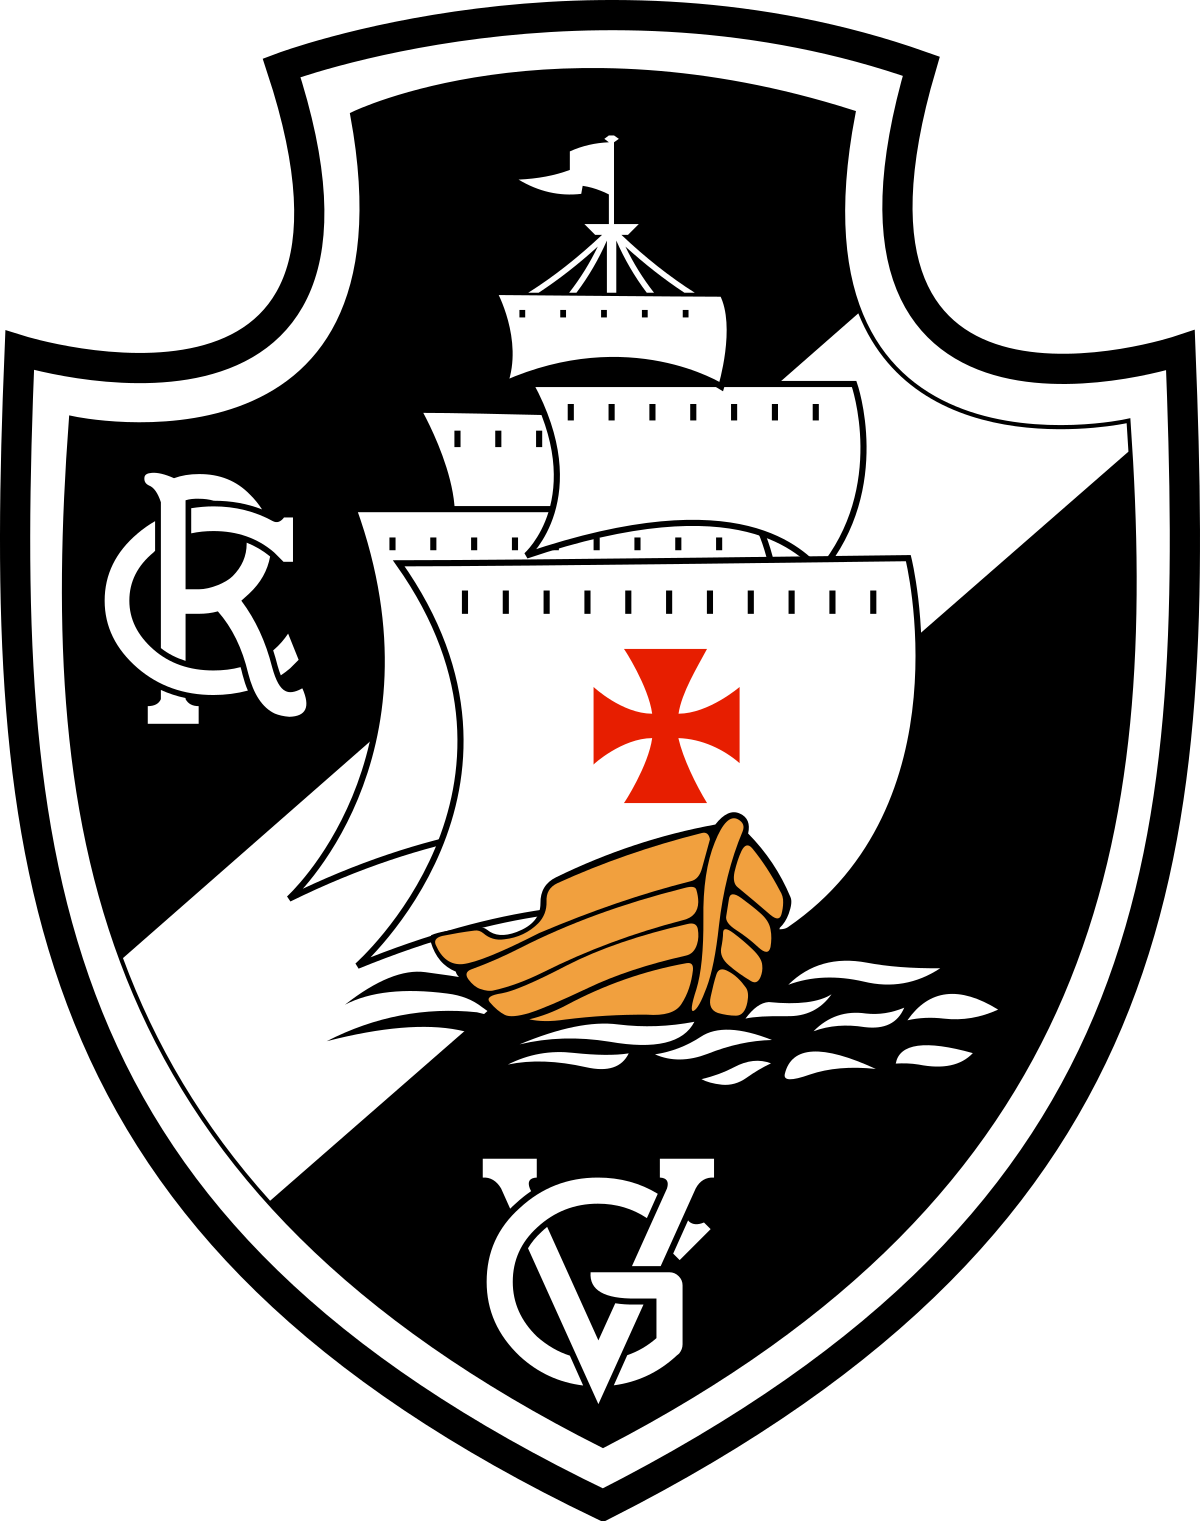 CR Vasco da Gama - Wikipedia